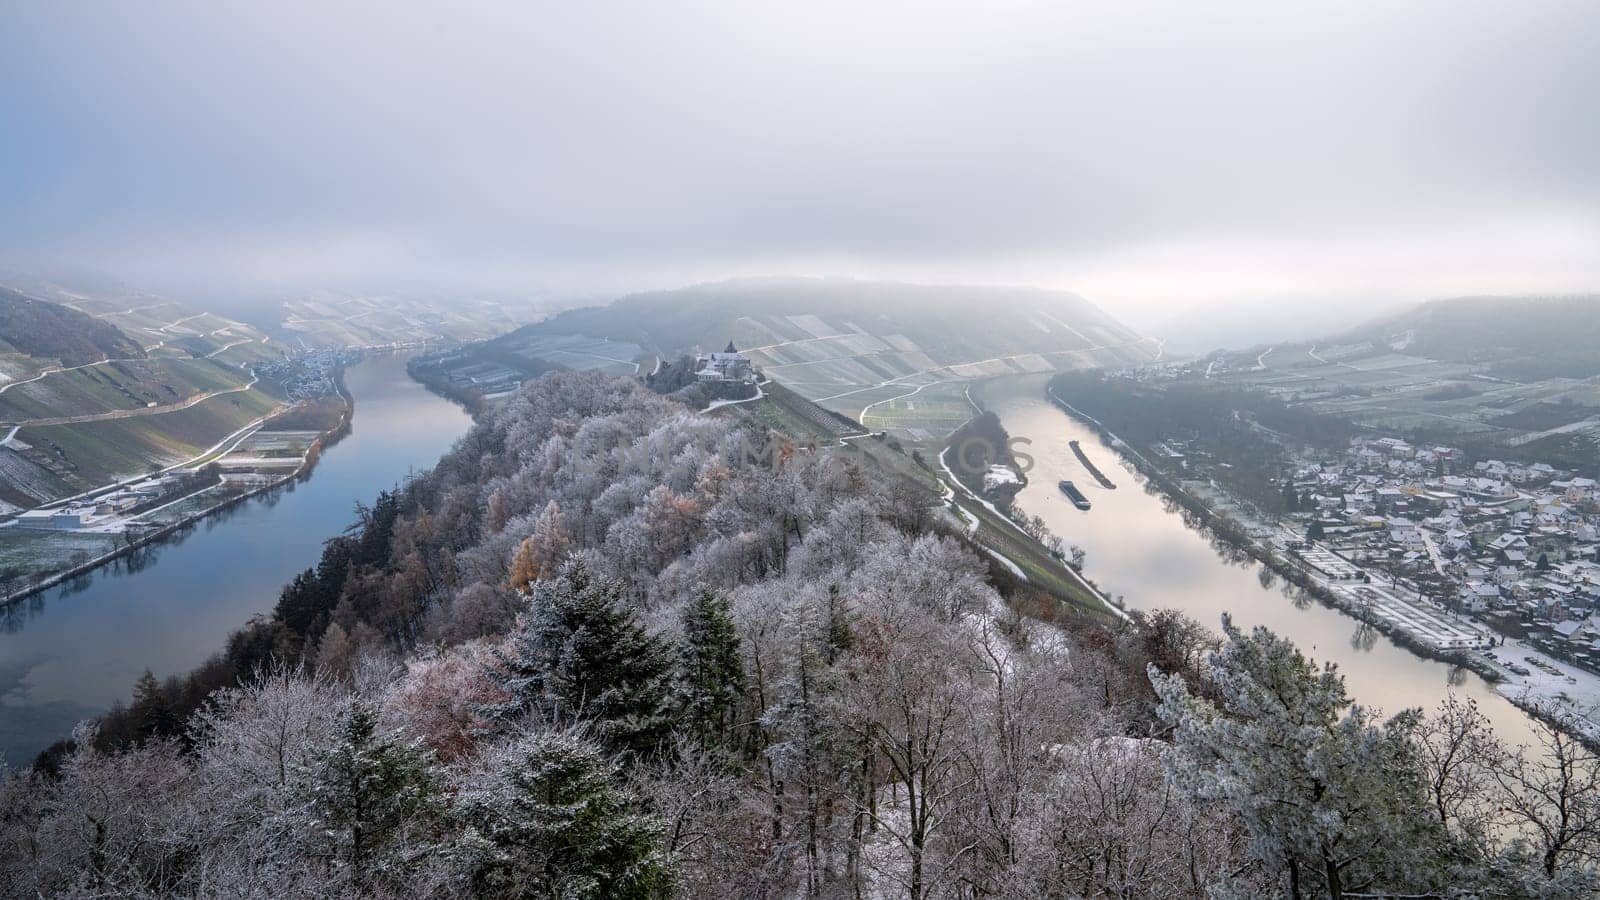 Mosell, Rhineland-Palatinate, Germany by alfotokunst